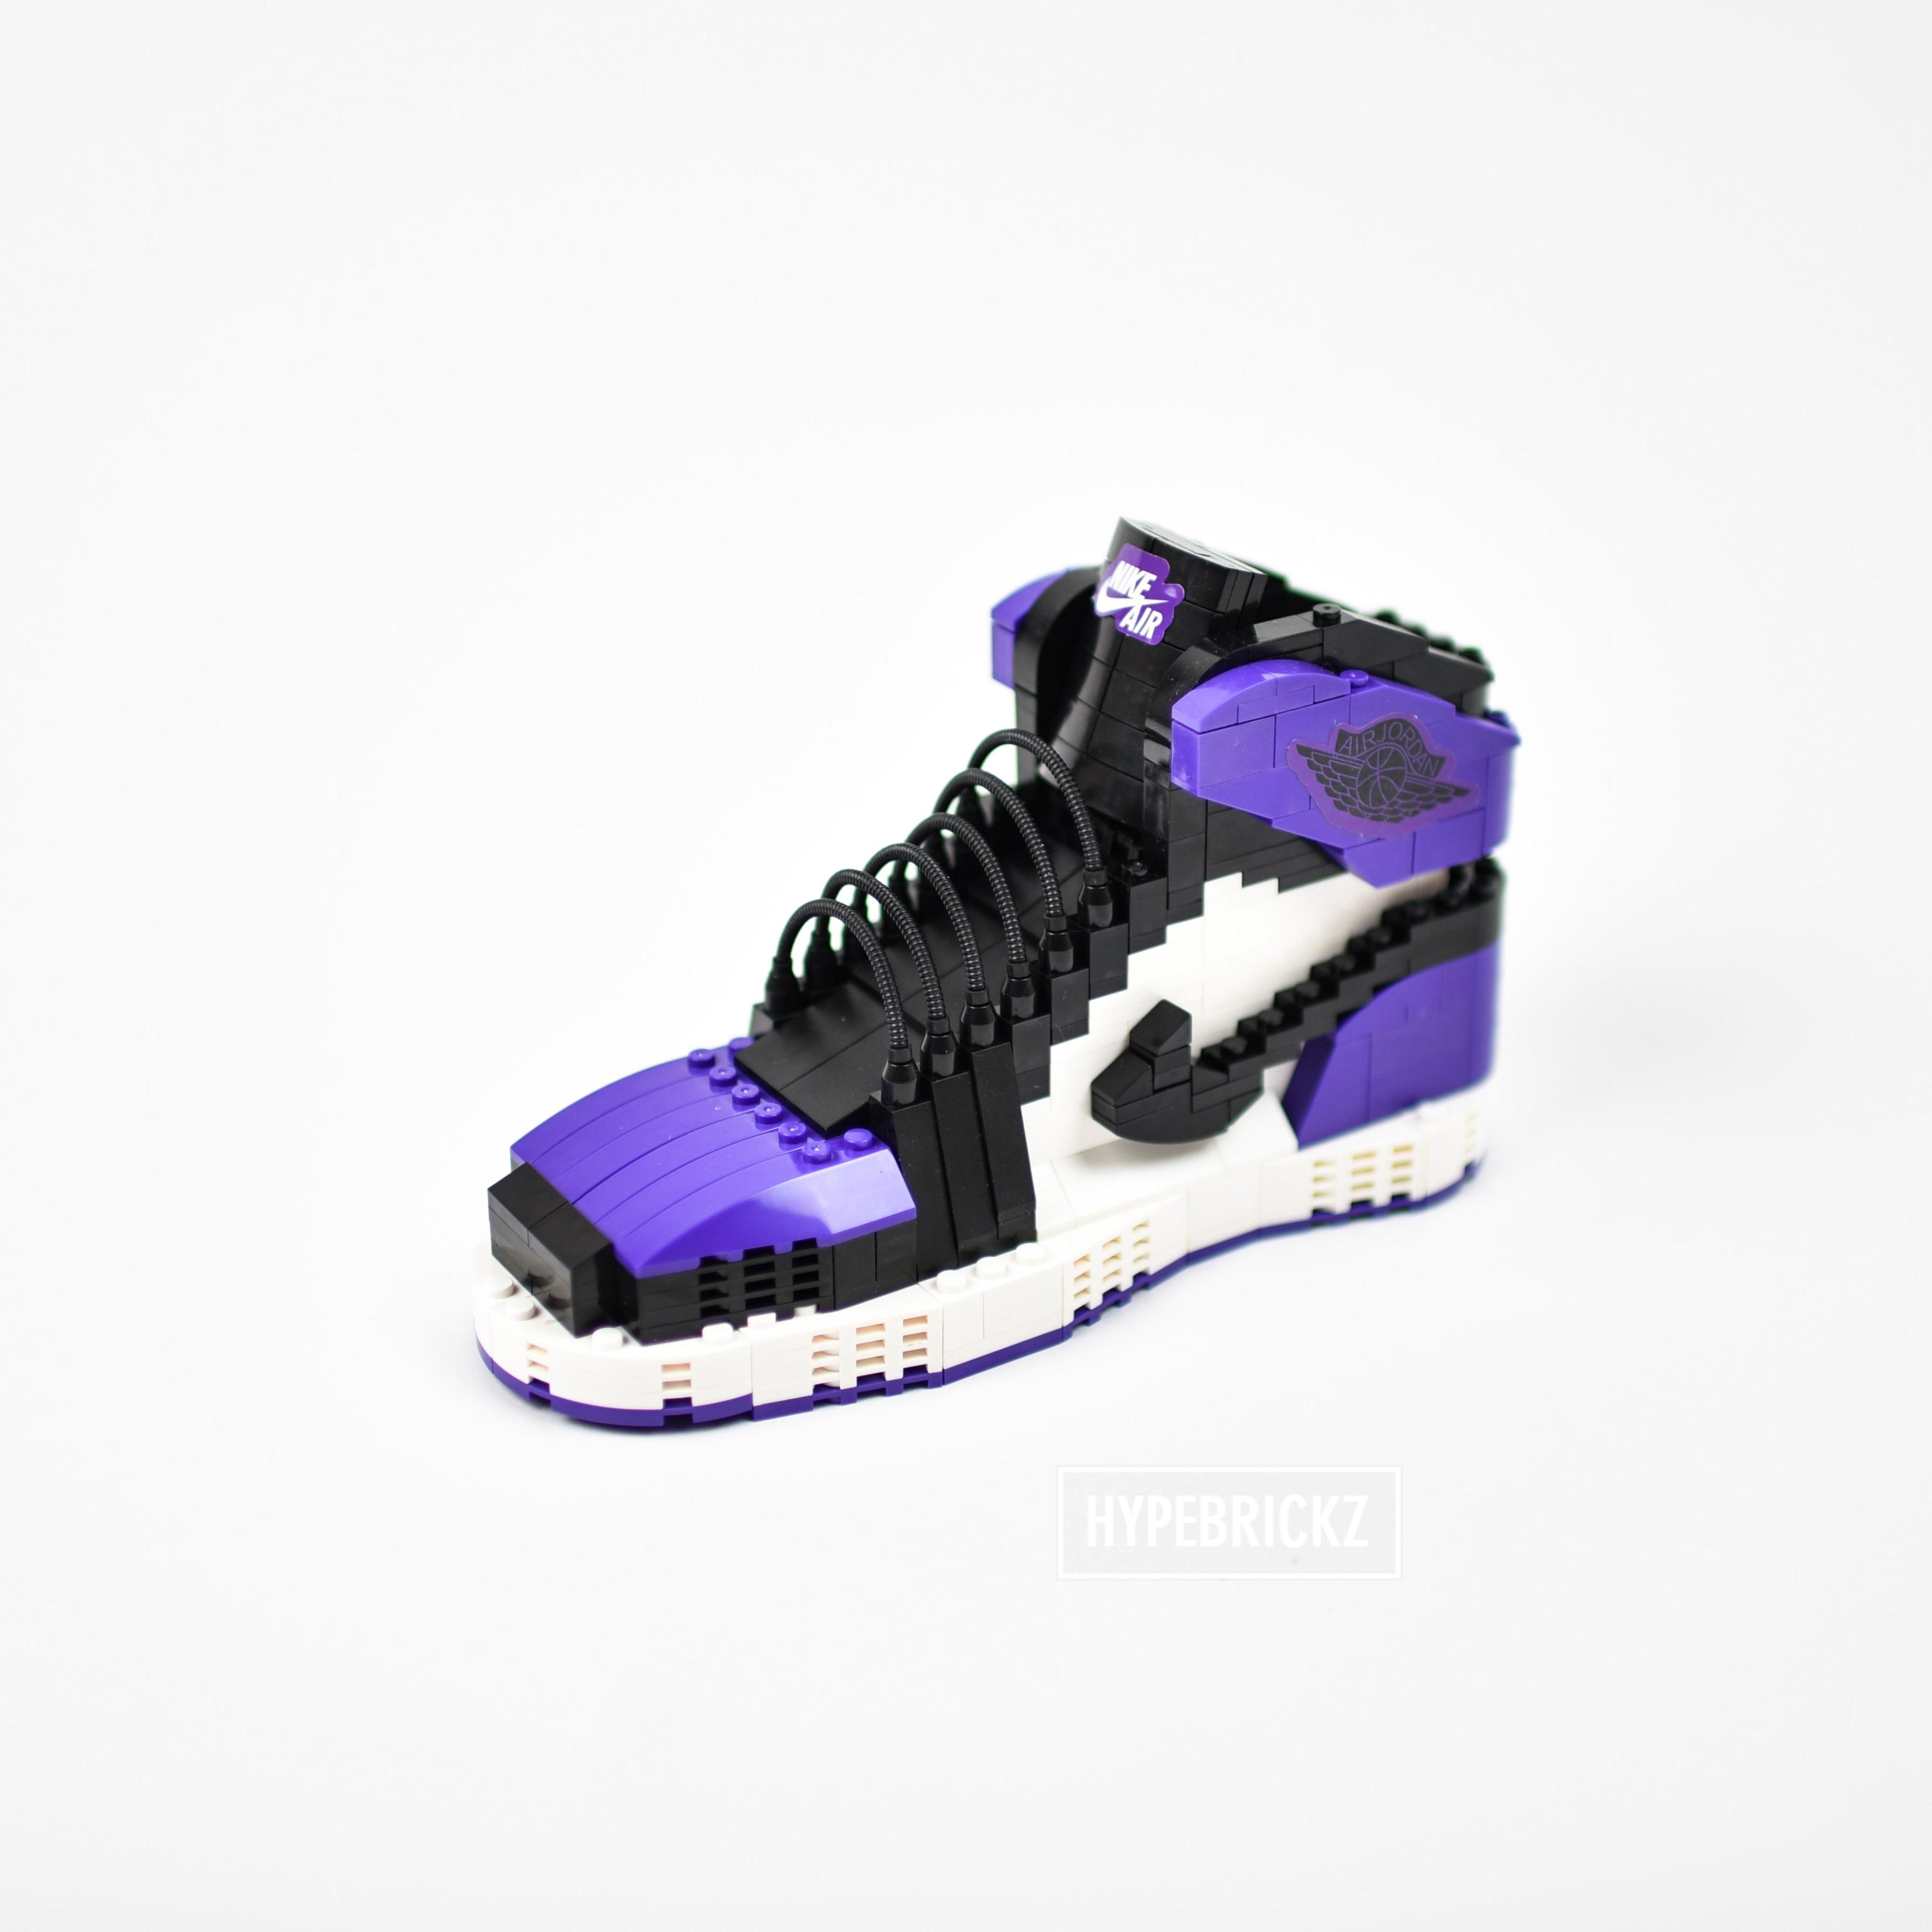 Alternate View 1 of LARGE AJ1 "Court Purple" Sneaker Bricks Sneaker 3D Puzzle Buildi